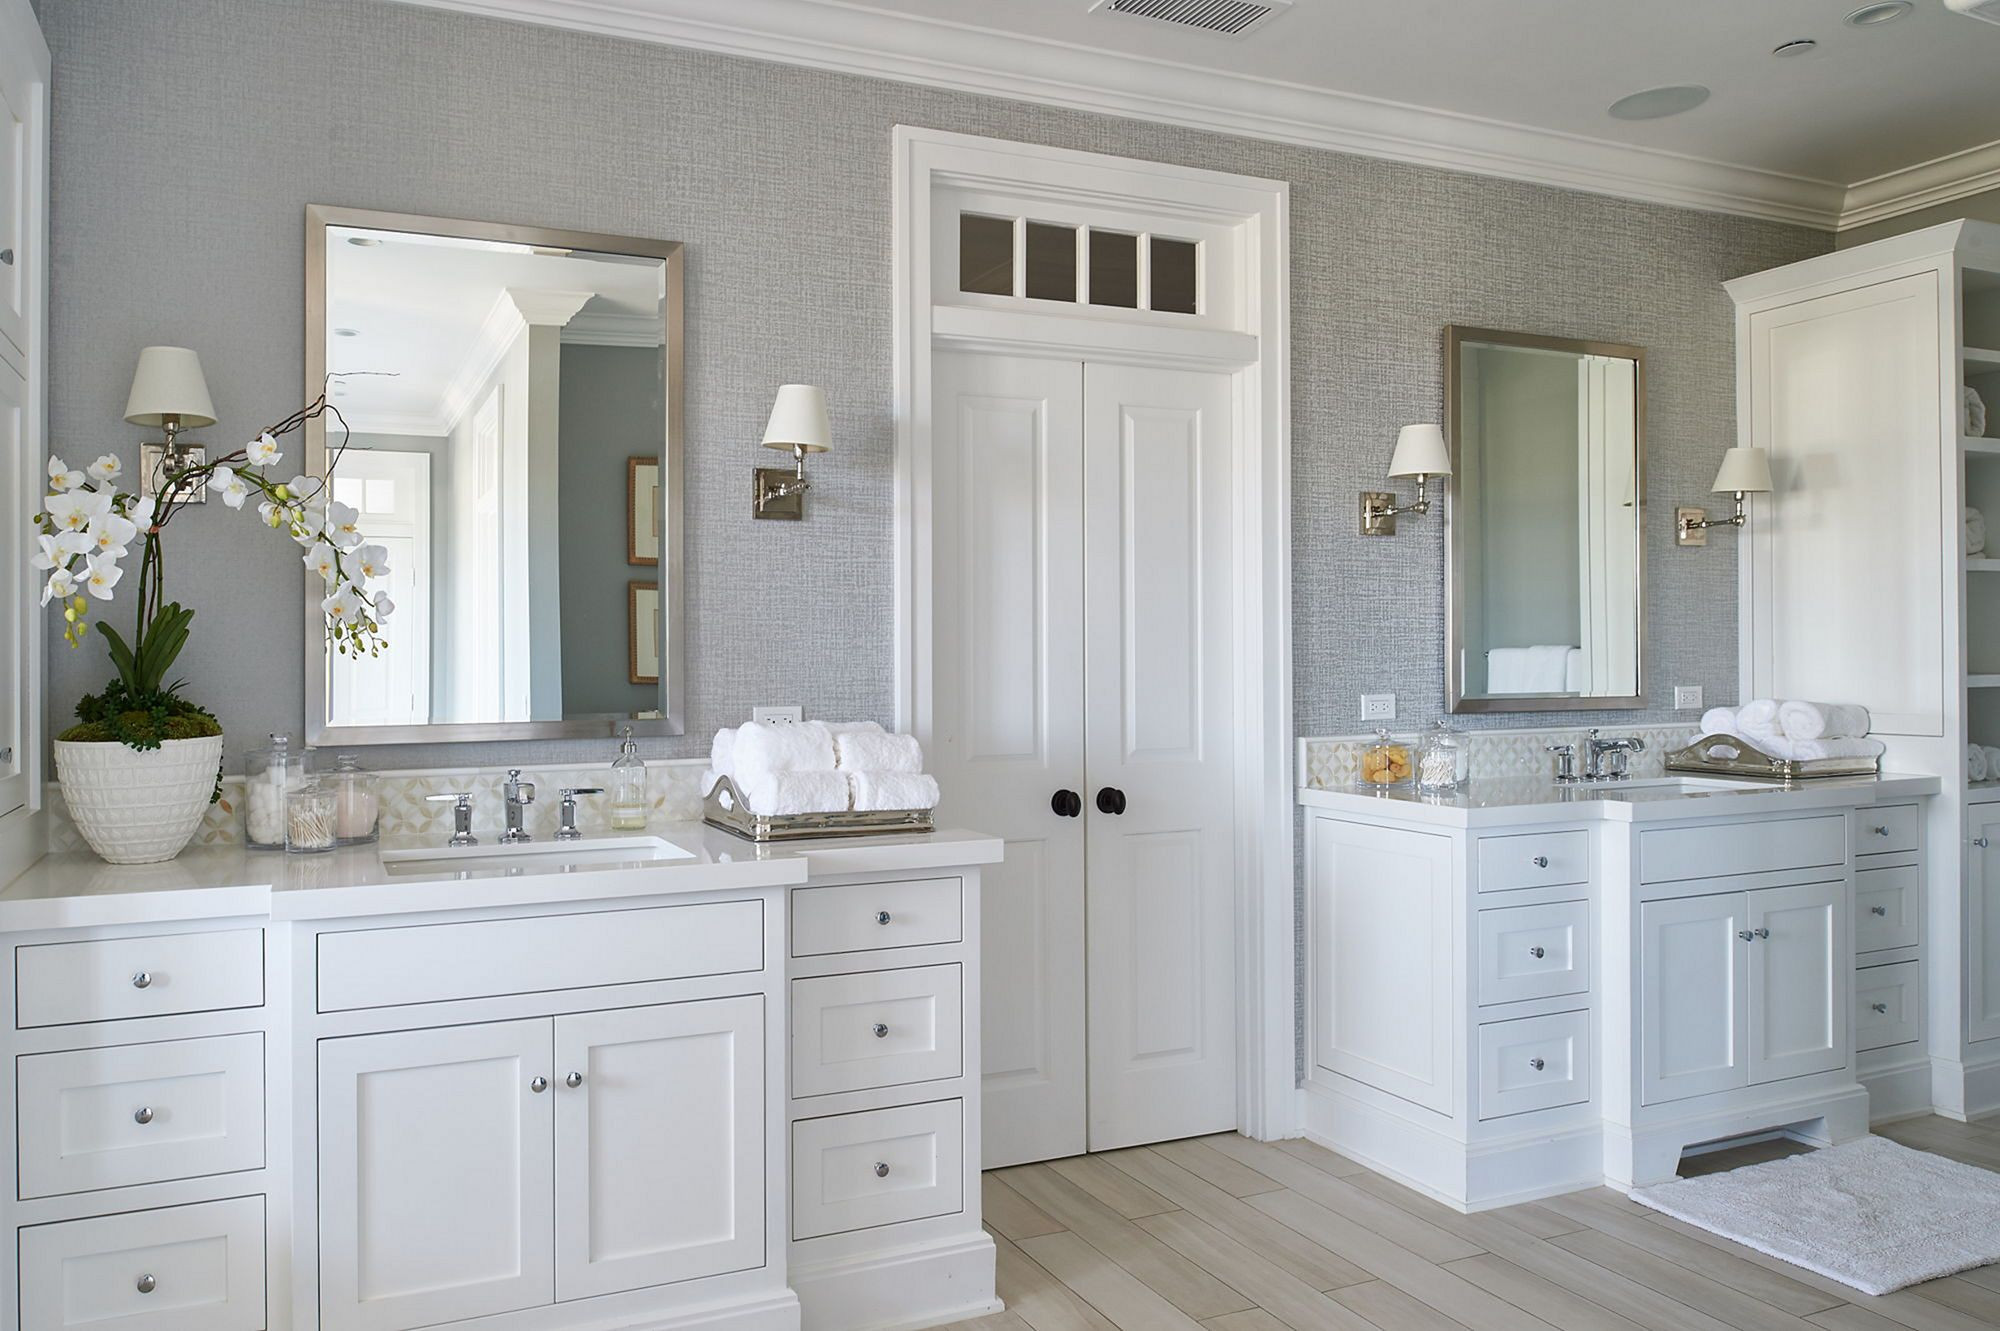 Master Bathroom Layout Ideas
 45 Best Master Bathroom Design Ideas For Your Big Home